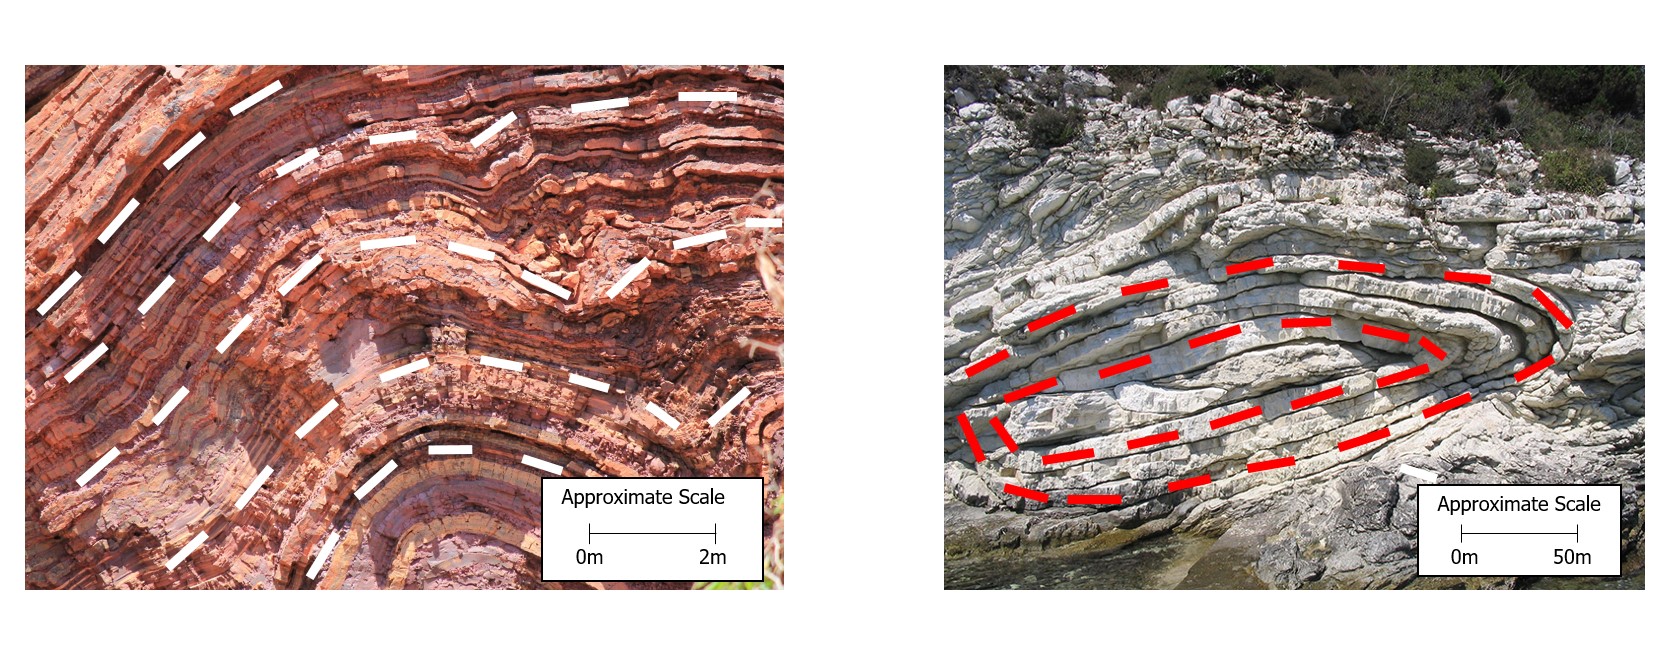 Figure 2: The example shown to the left depicts an iron ore deposit in Australia. Source: https://www.ga.gov.au/education/classroom-resources/minerals-energy/australian-mineral-facts/iron. The example shown to the right depicts a carbonate sediments deposit in Greece. Source: https://en.geol.uoa.gr/el/department/gallery/.